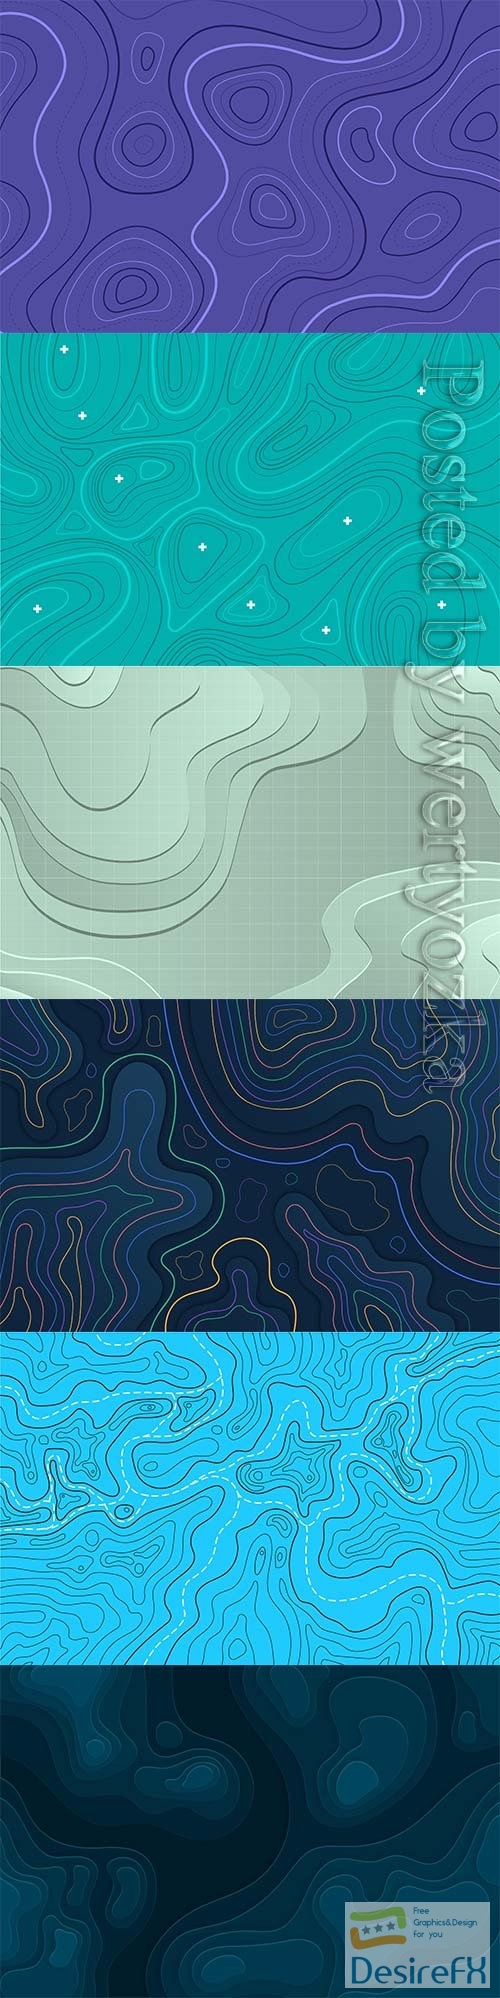 Topographic map wallpaper vector concept